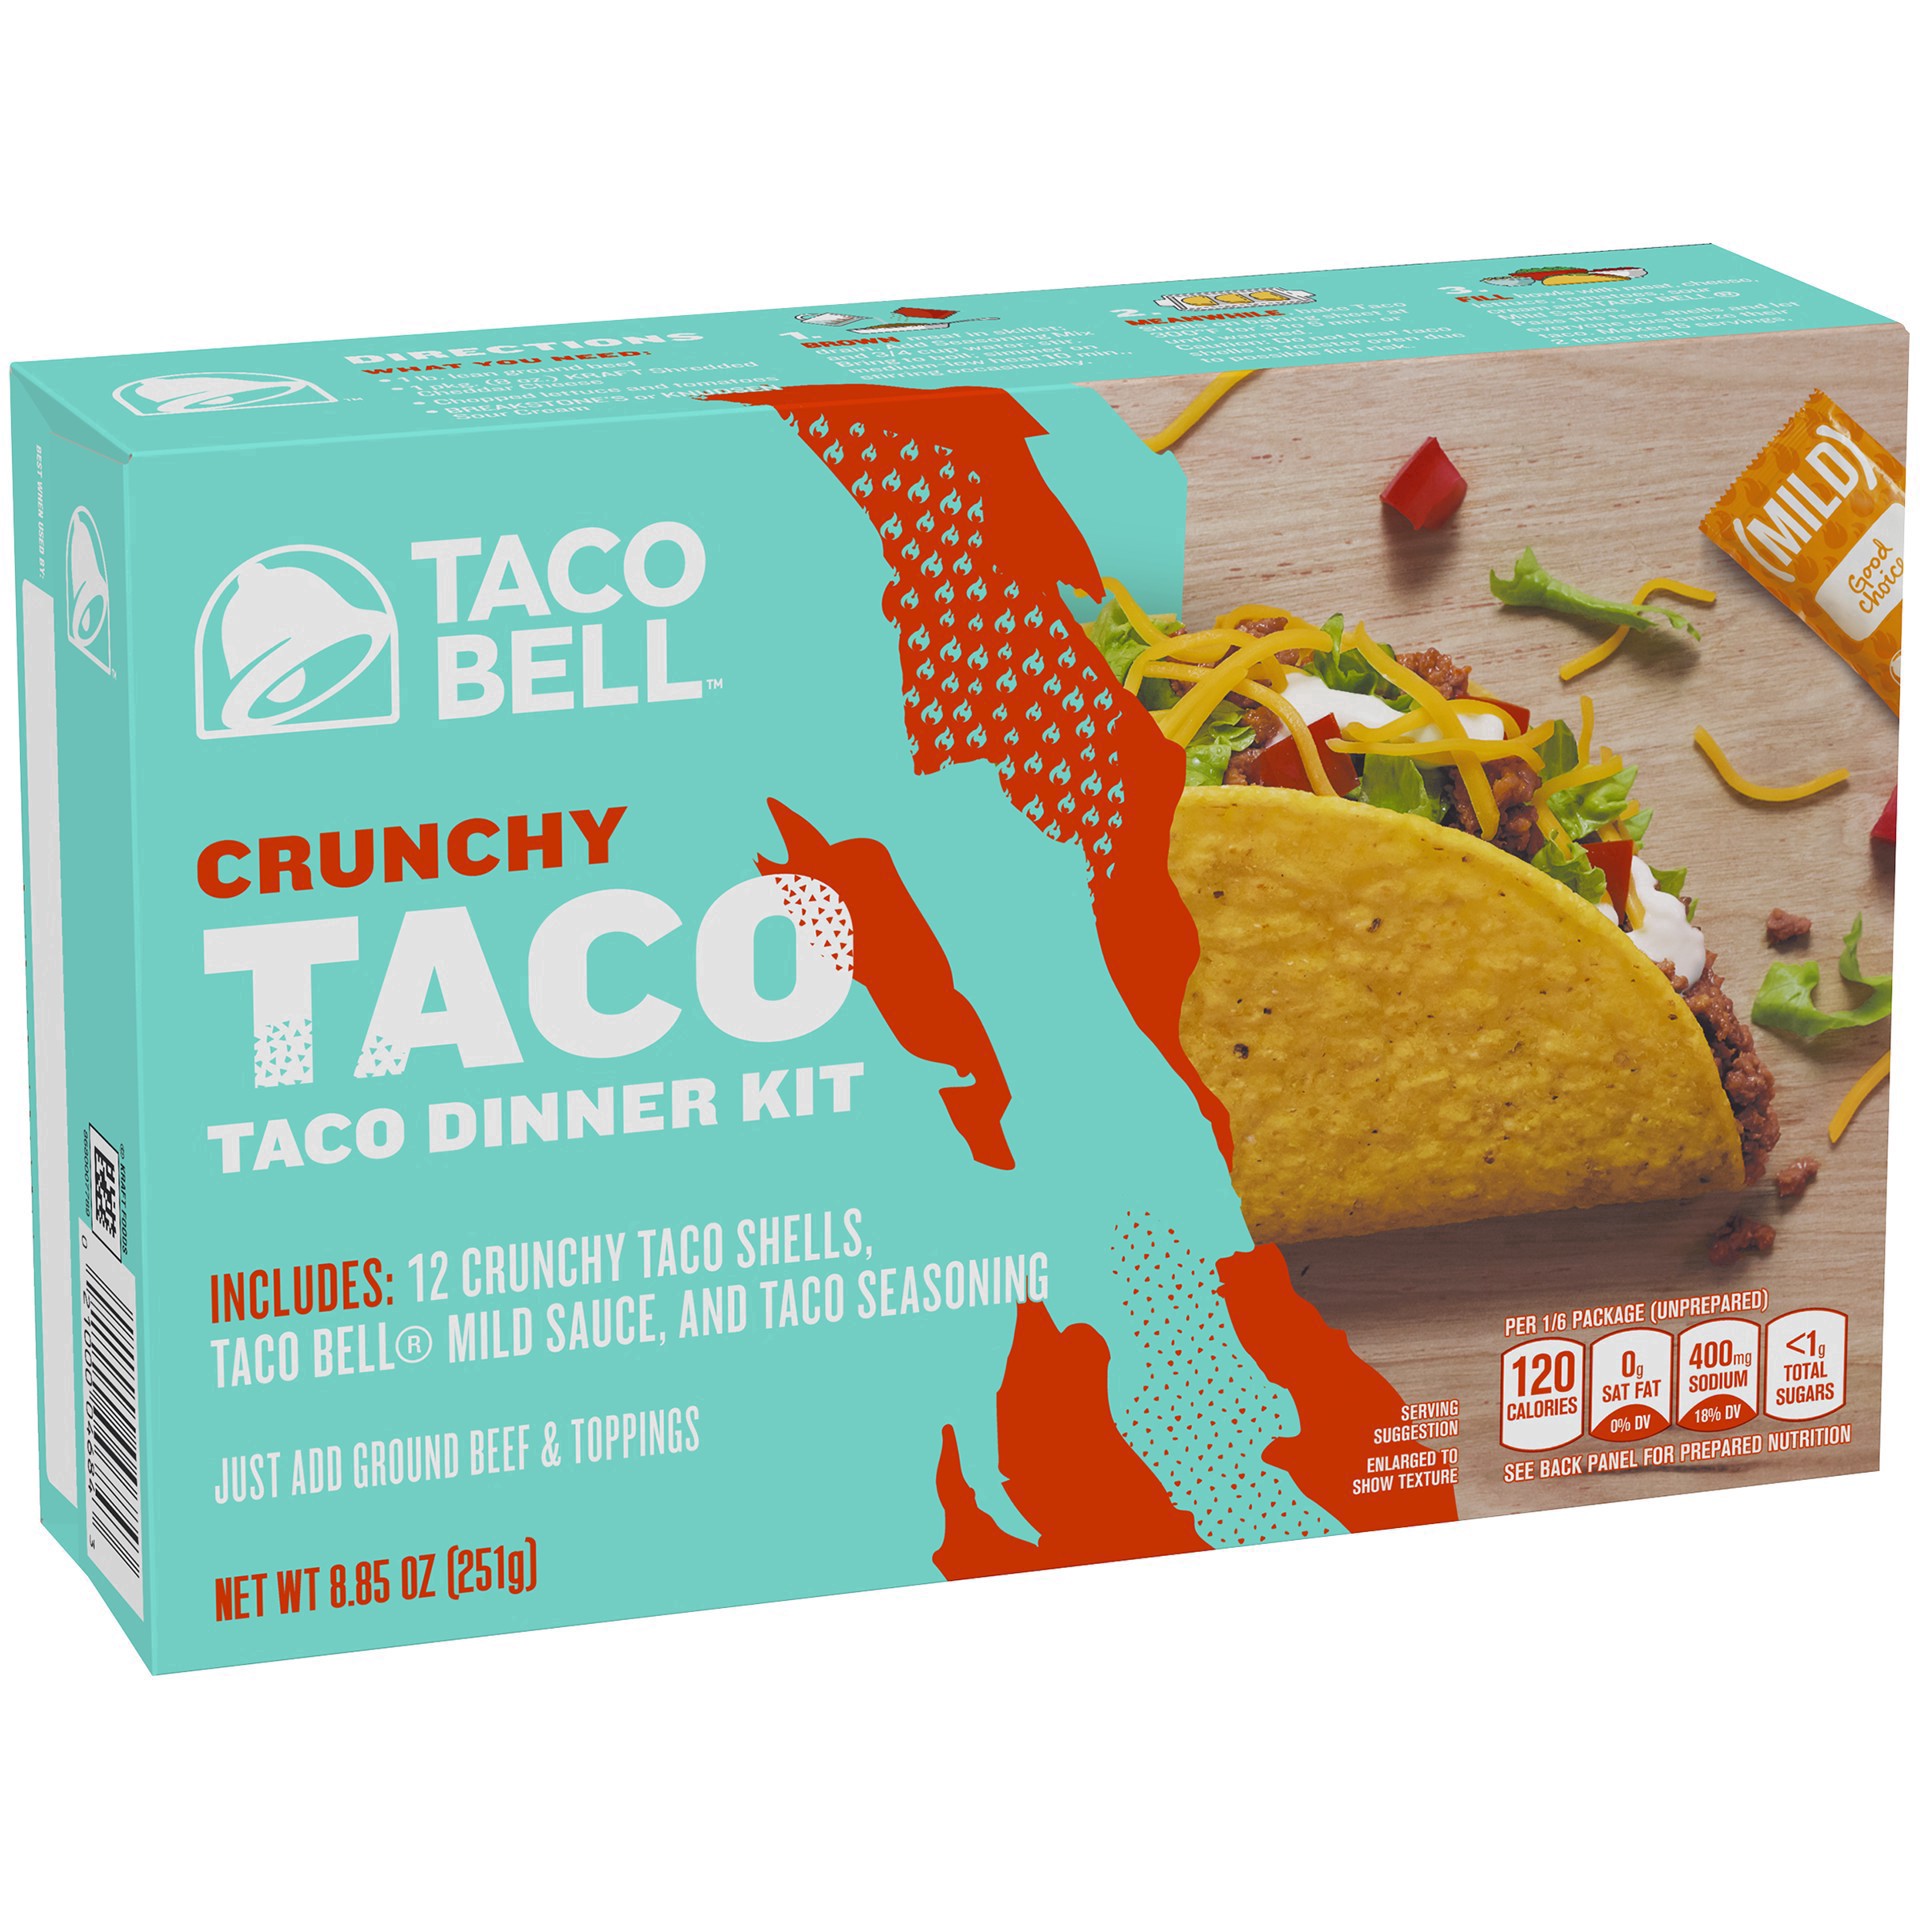 slide 65 of 91, Taco Bell Crunchy Taco Cravings Kit with 12 Crunchy Taco Shells, Taco Bell Mild Sauce & Seasoning, 8.85 oz Box, 1 ct